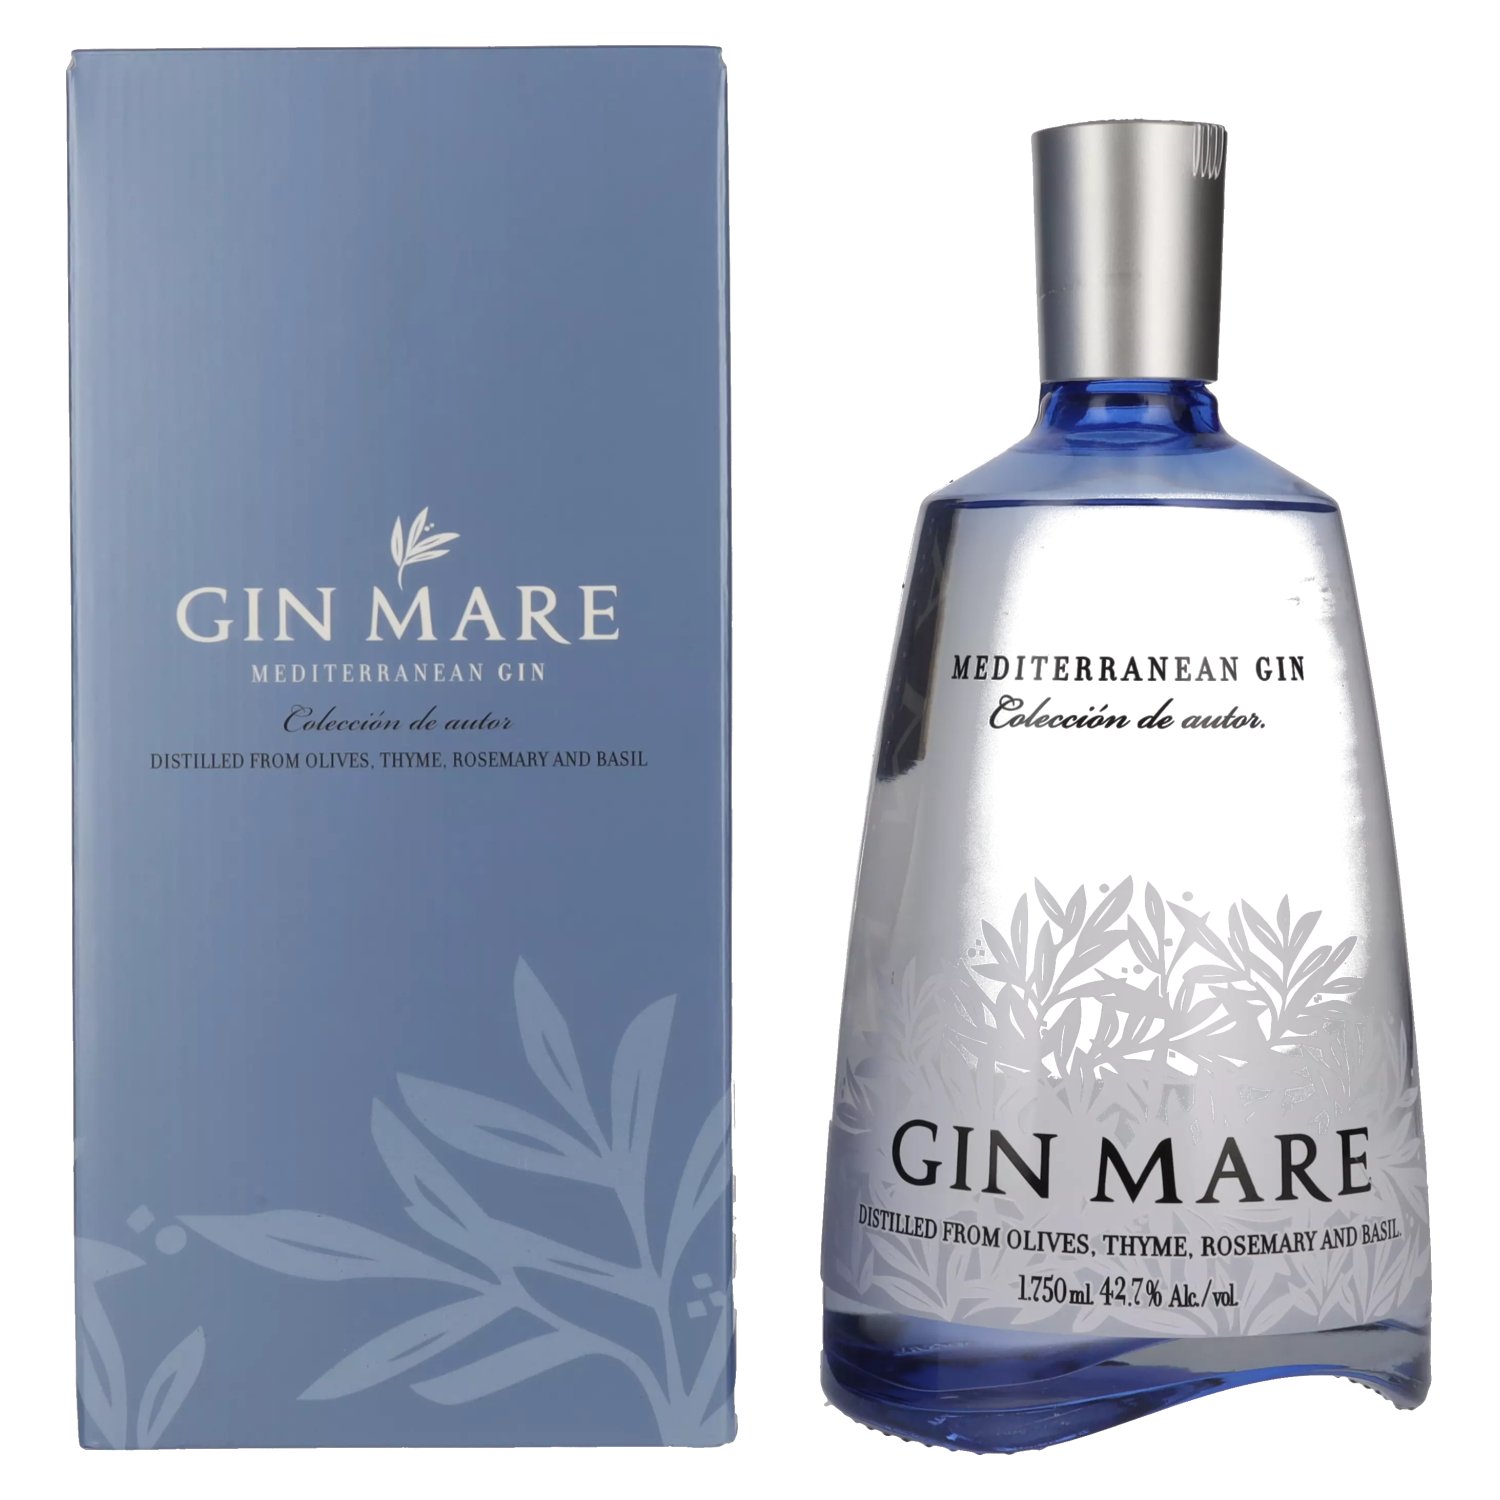 Gin Mare Mediterranean Gin 42,7% 1,75l in Giftbox Vol